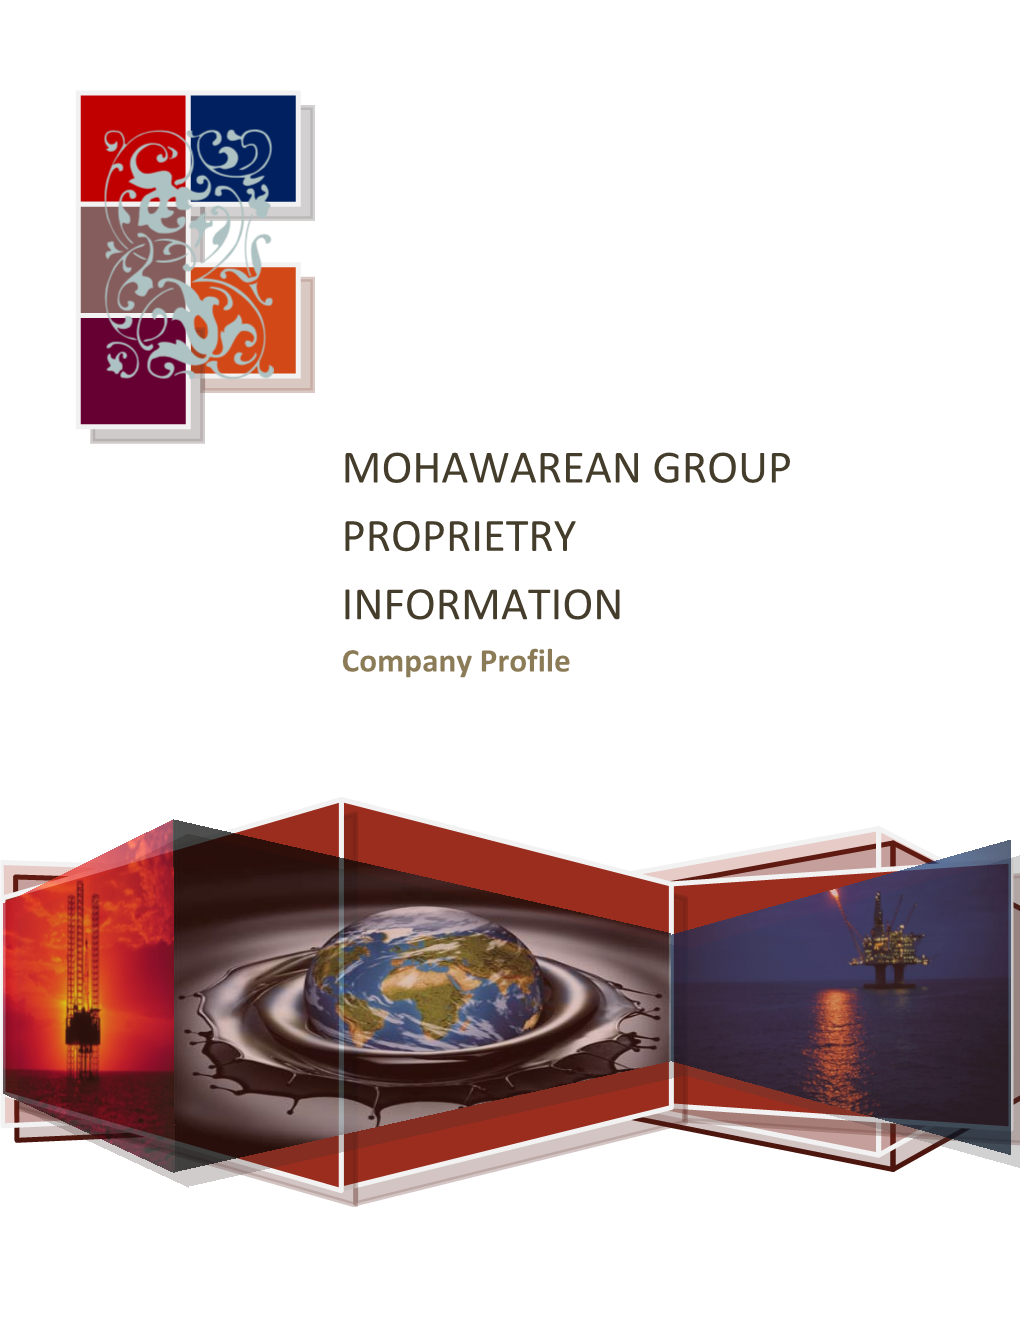 Al Haitam Group Proprietry Information